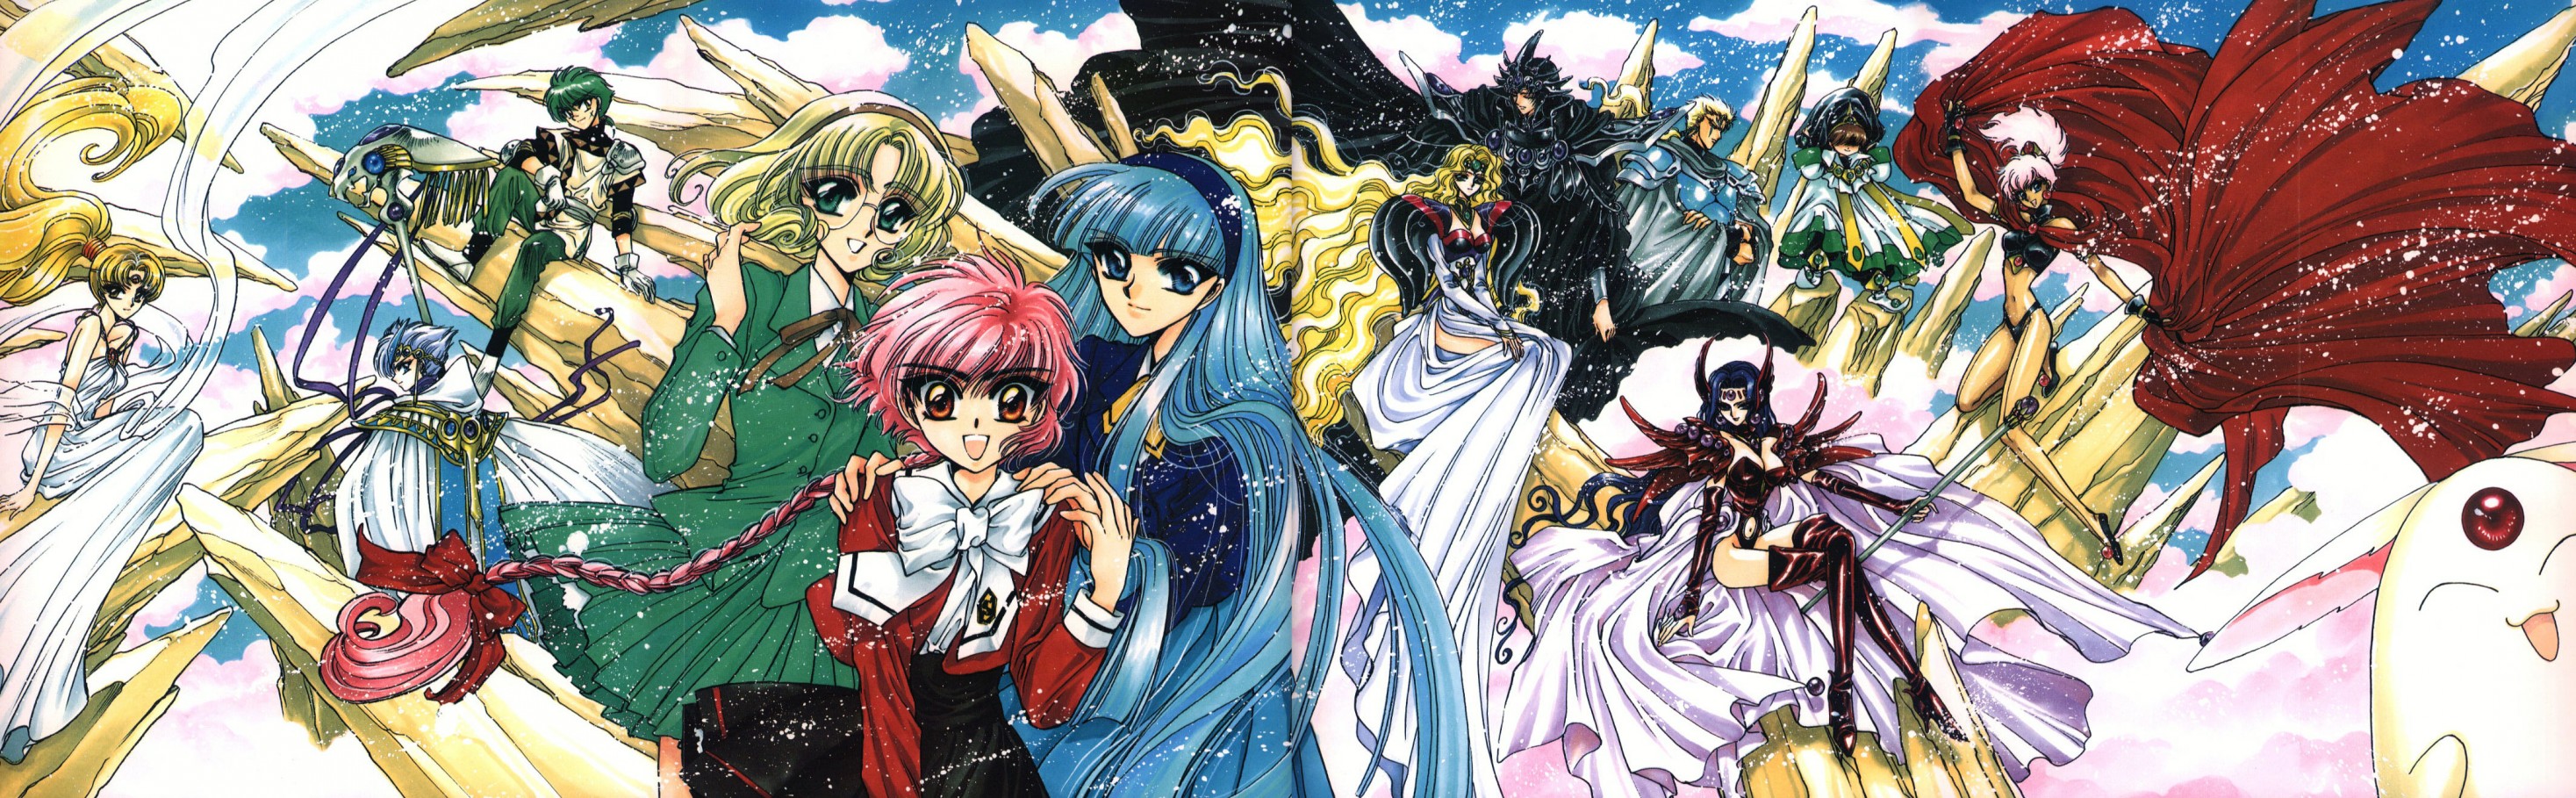 download anime magic knight rayearth sub indo